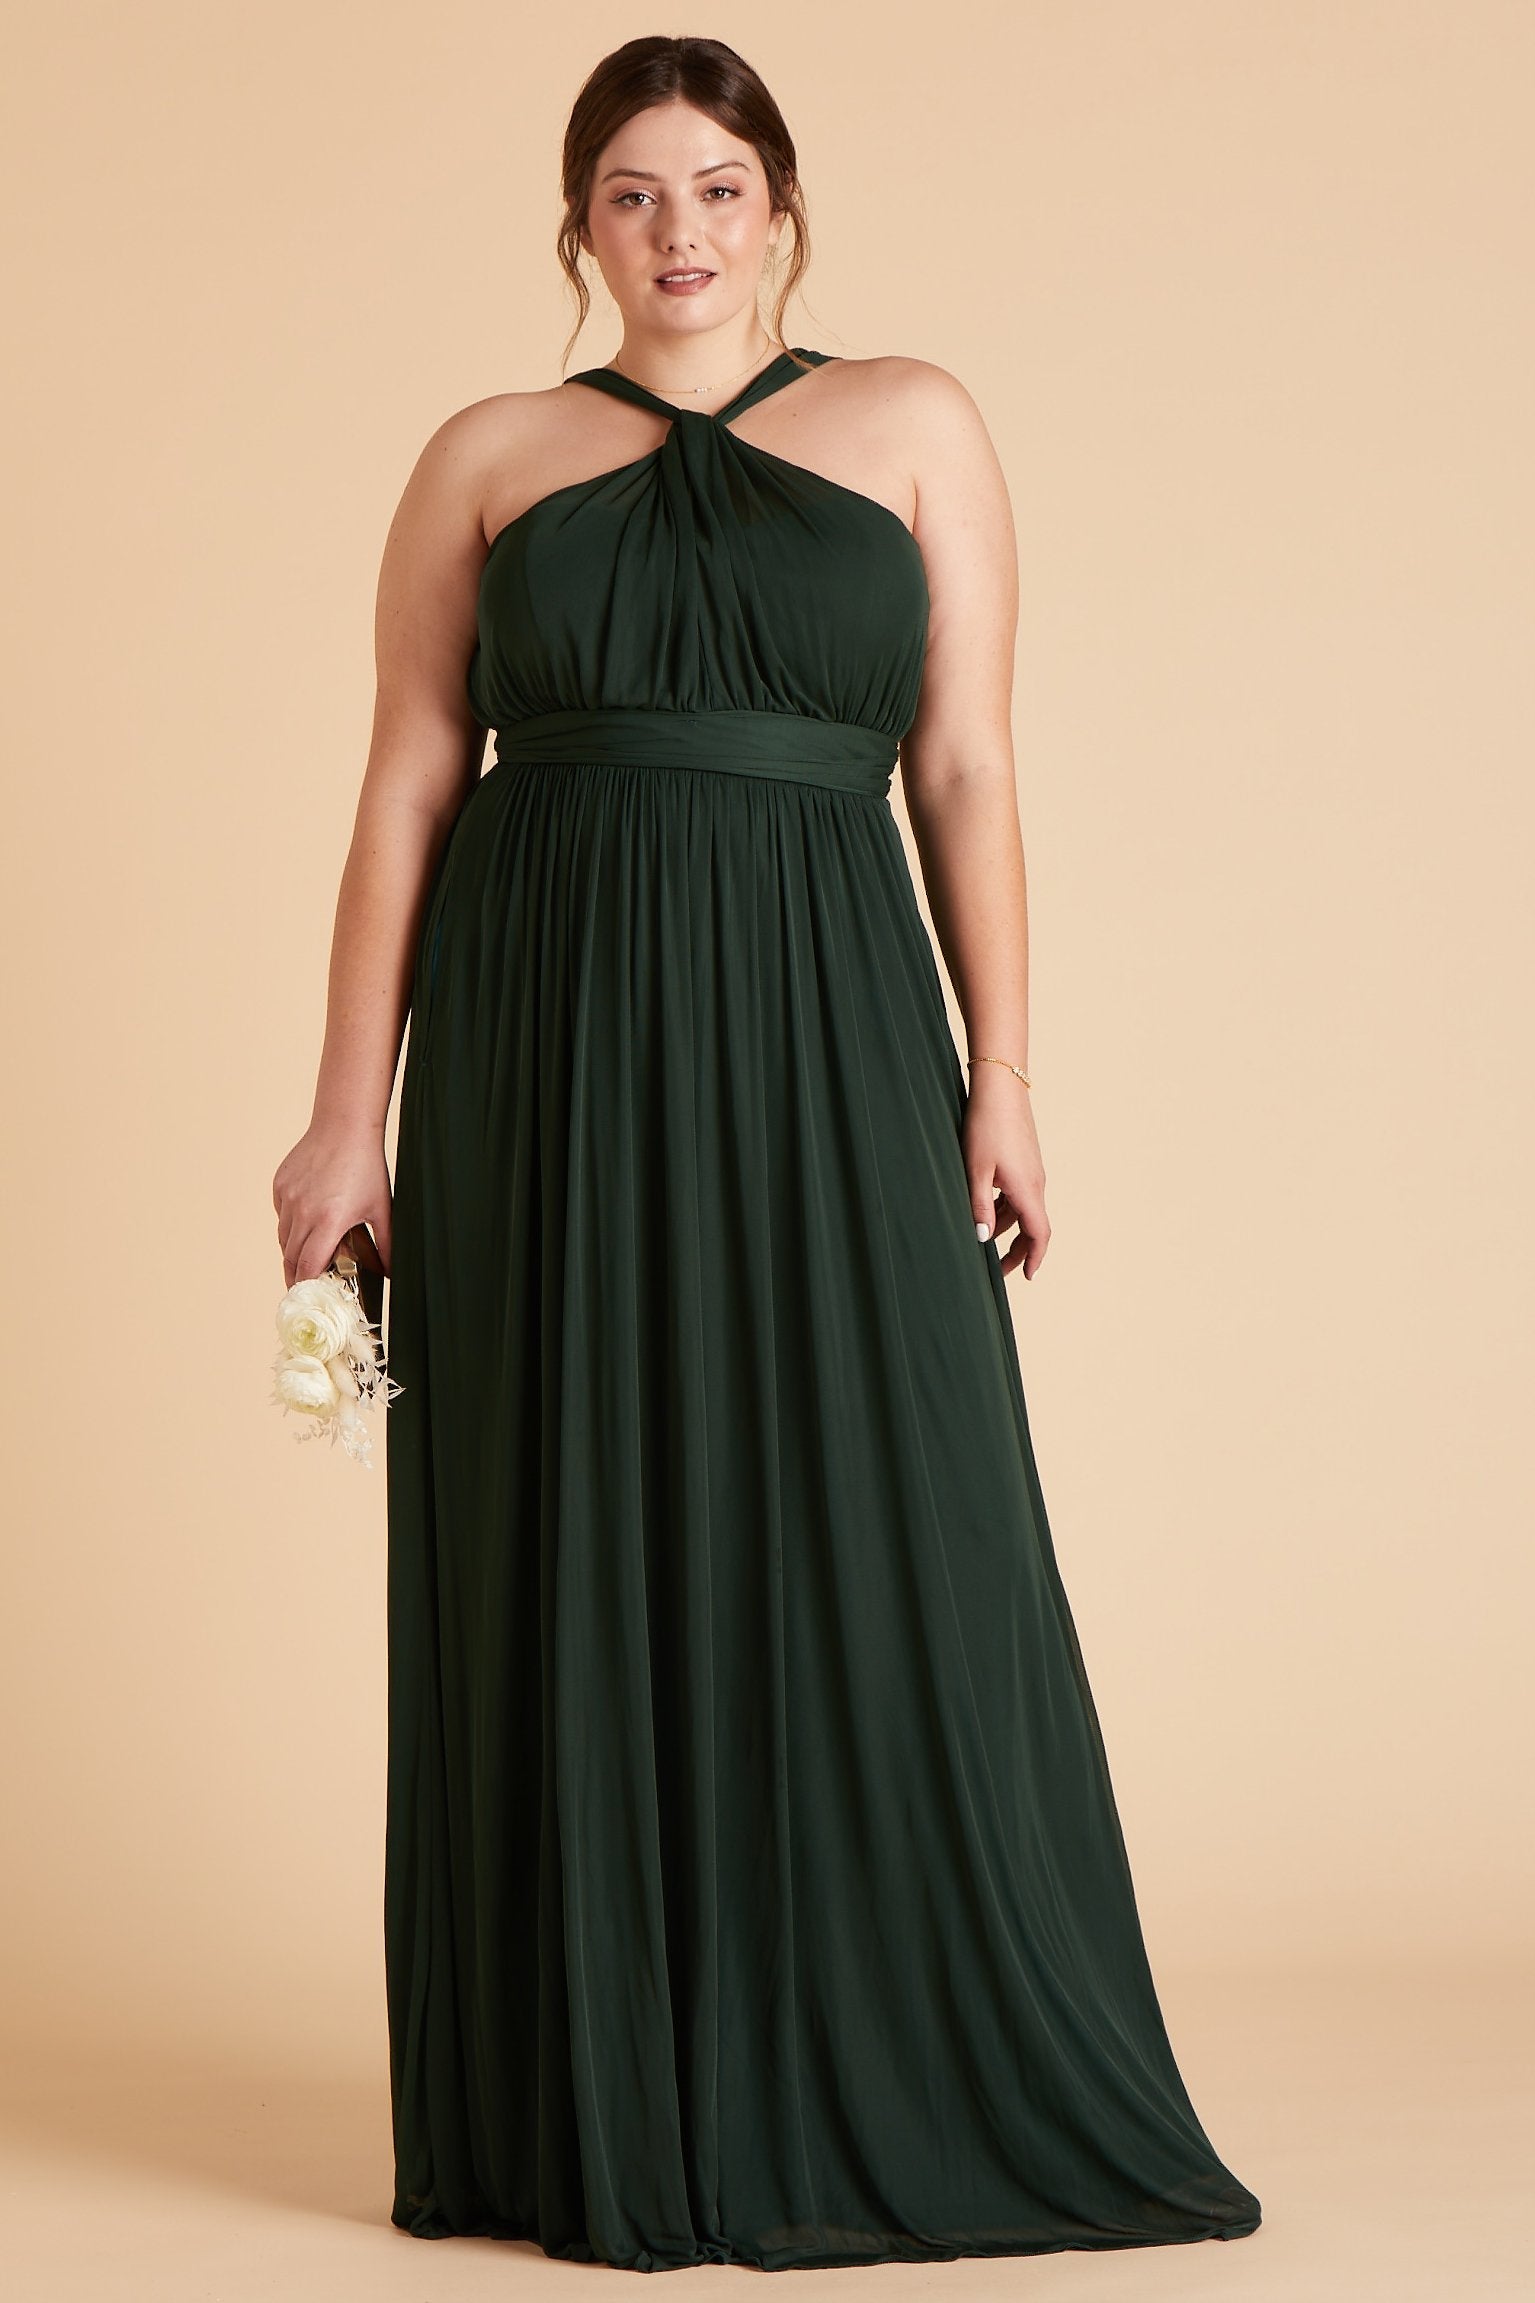 Kiko plus size bridesmaid dress in emerald green chiffon by Birdy Grey, front view